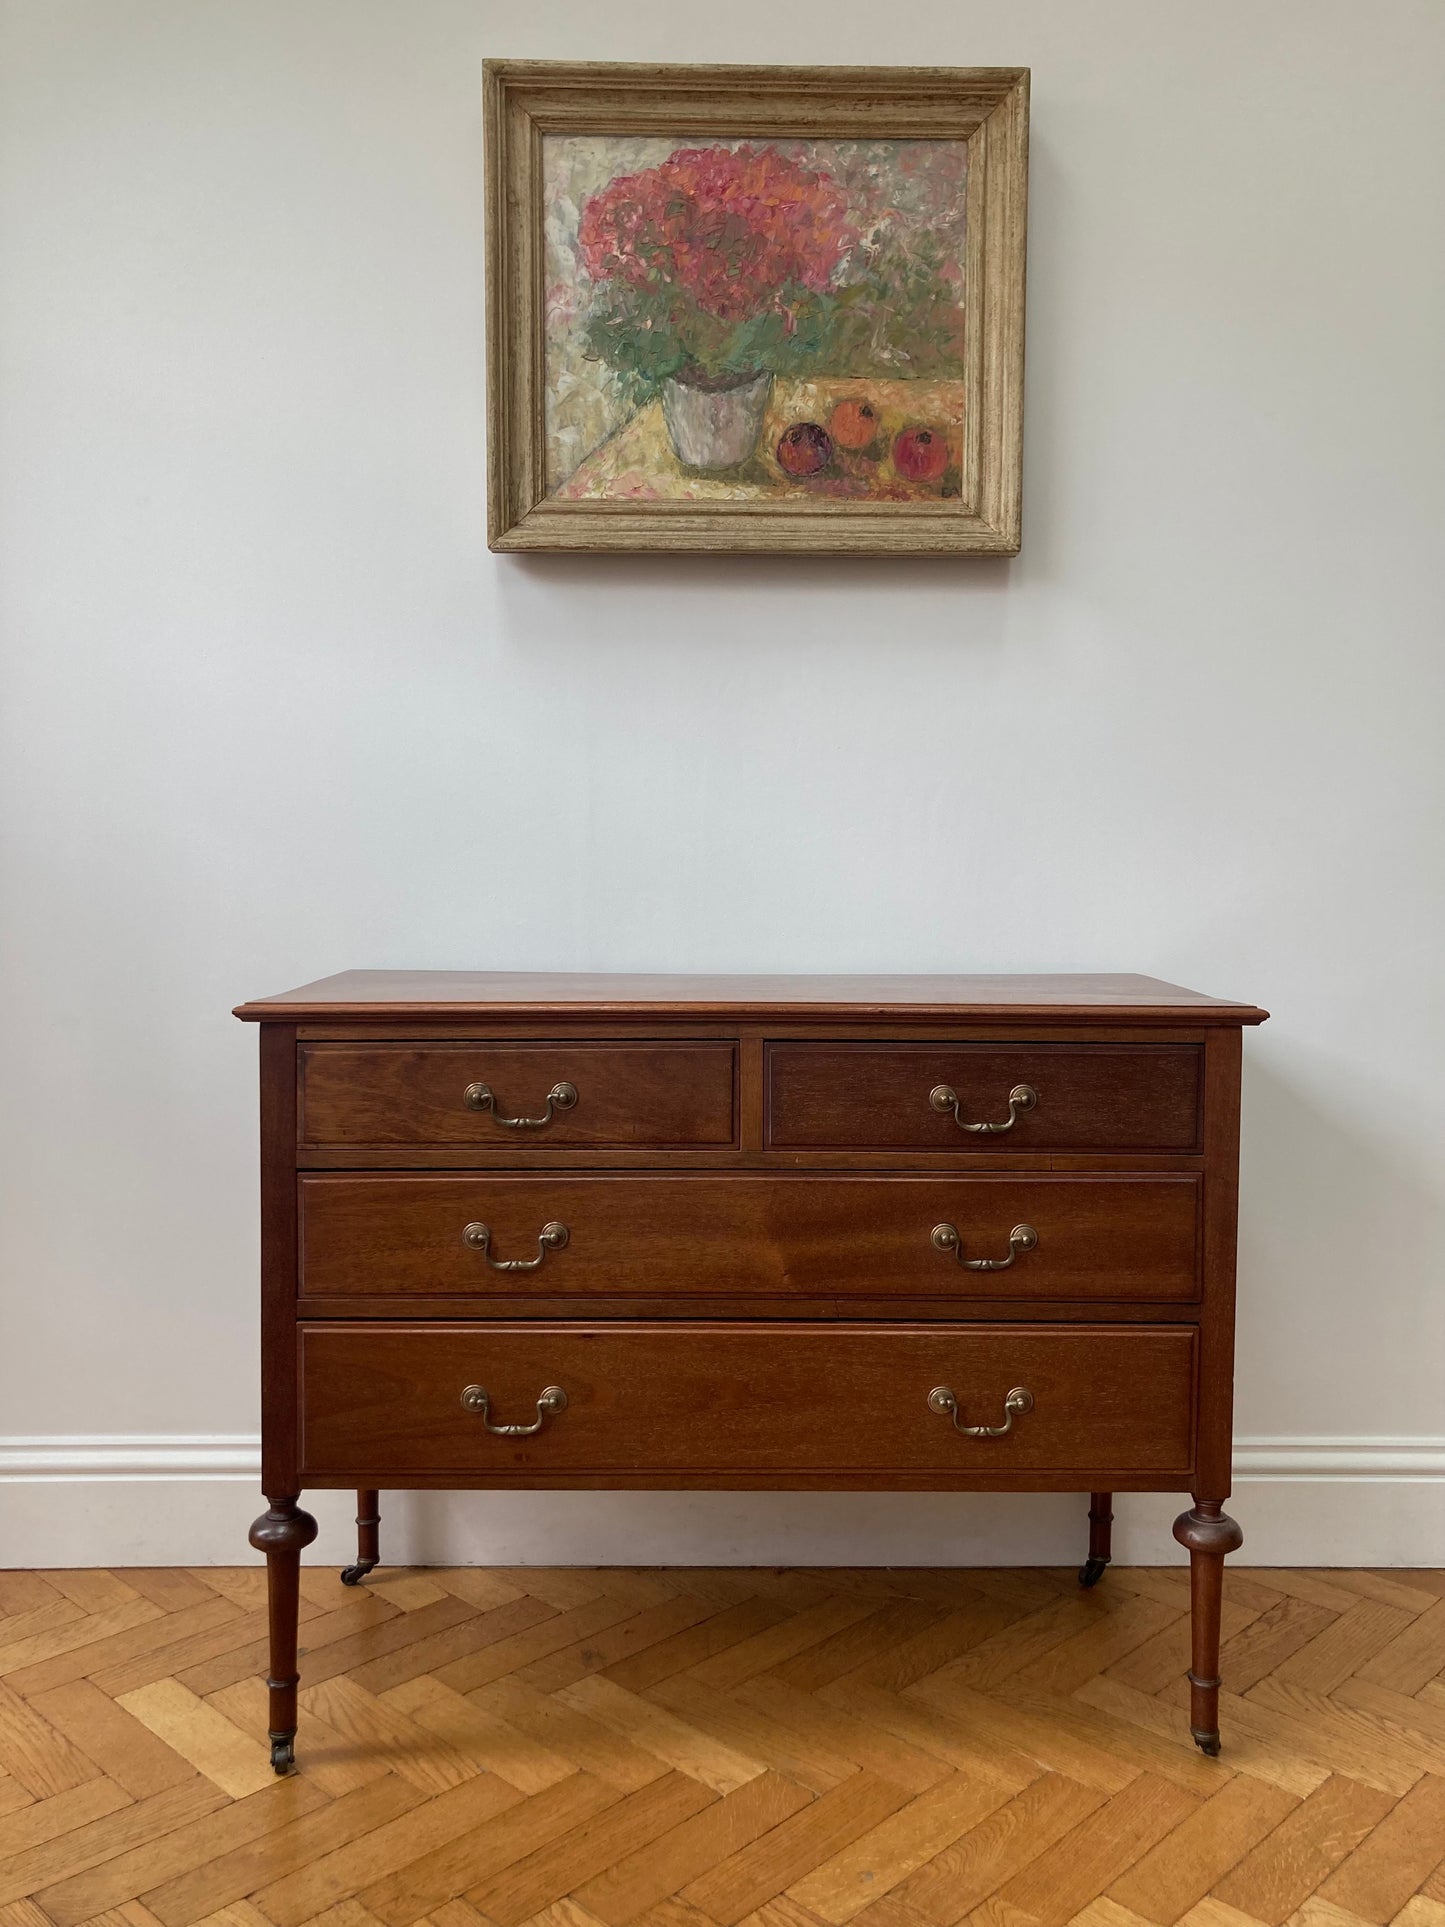 20th Century mahogany chest of drawers